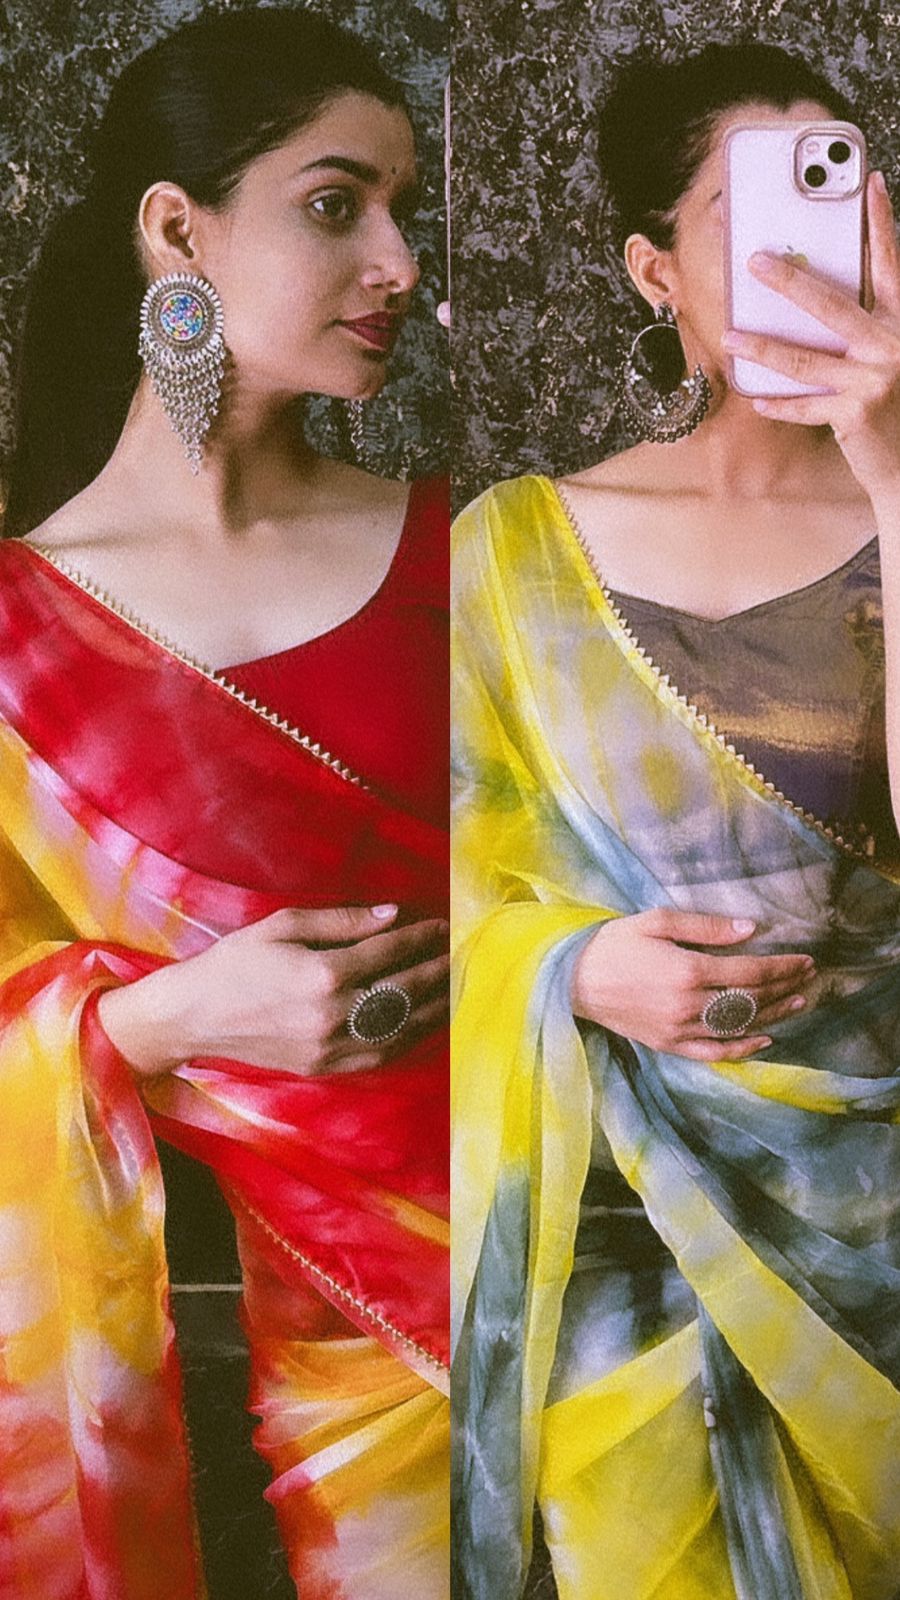 Fabric Organja saree with beautiful multi colour tye nd dye saree with contrast blouse